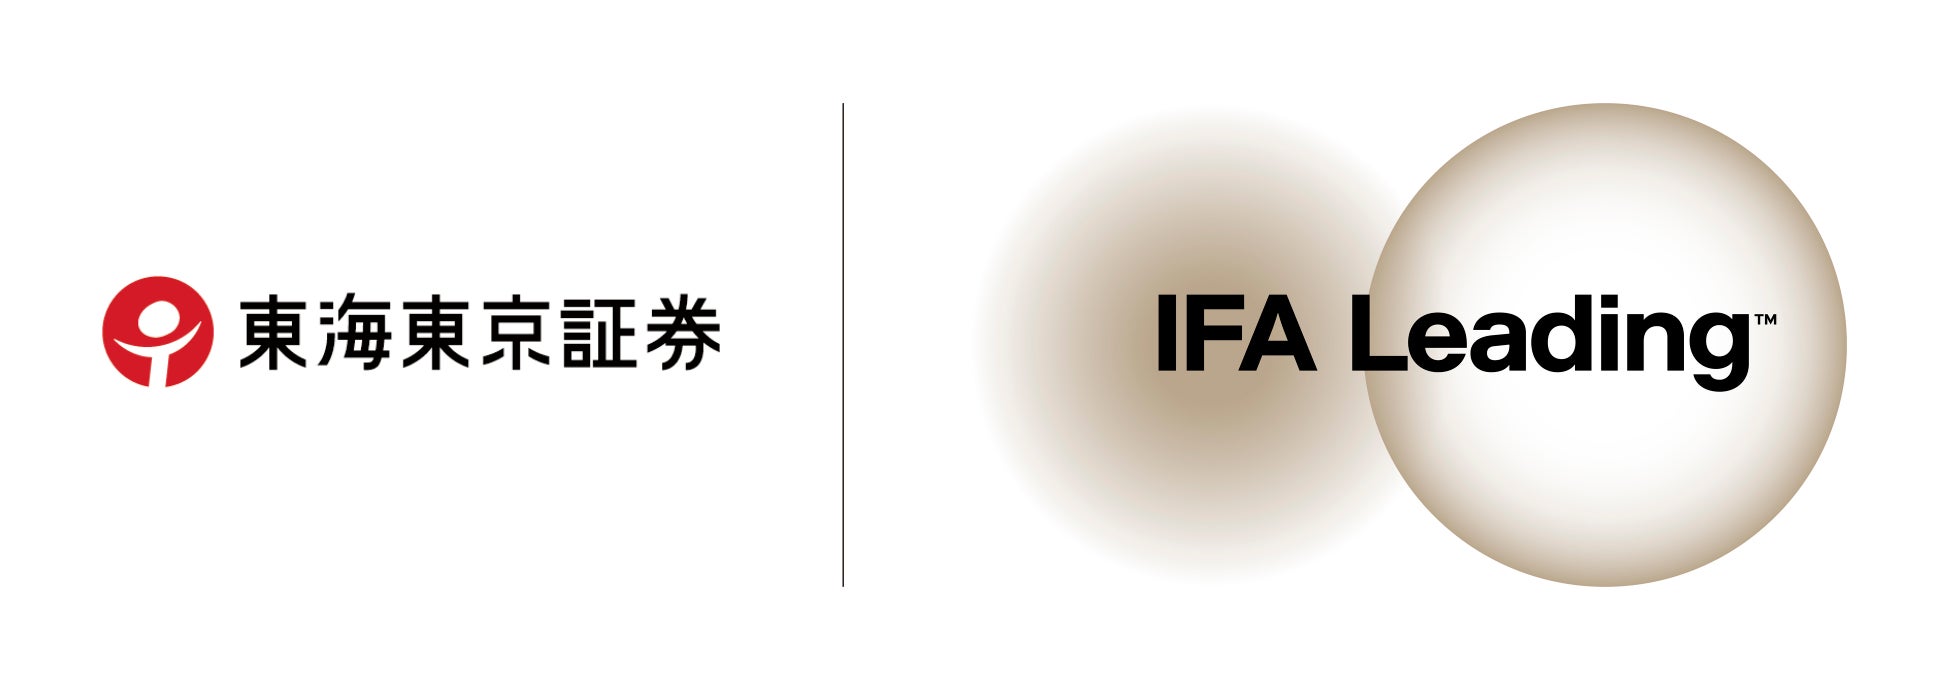 IFA Leadingが東海東京証券と業務提携